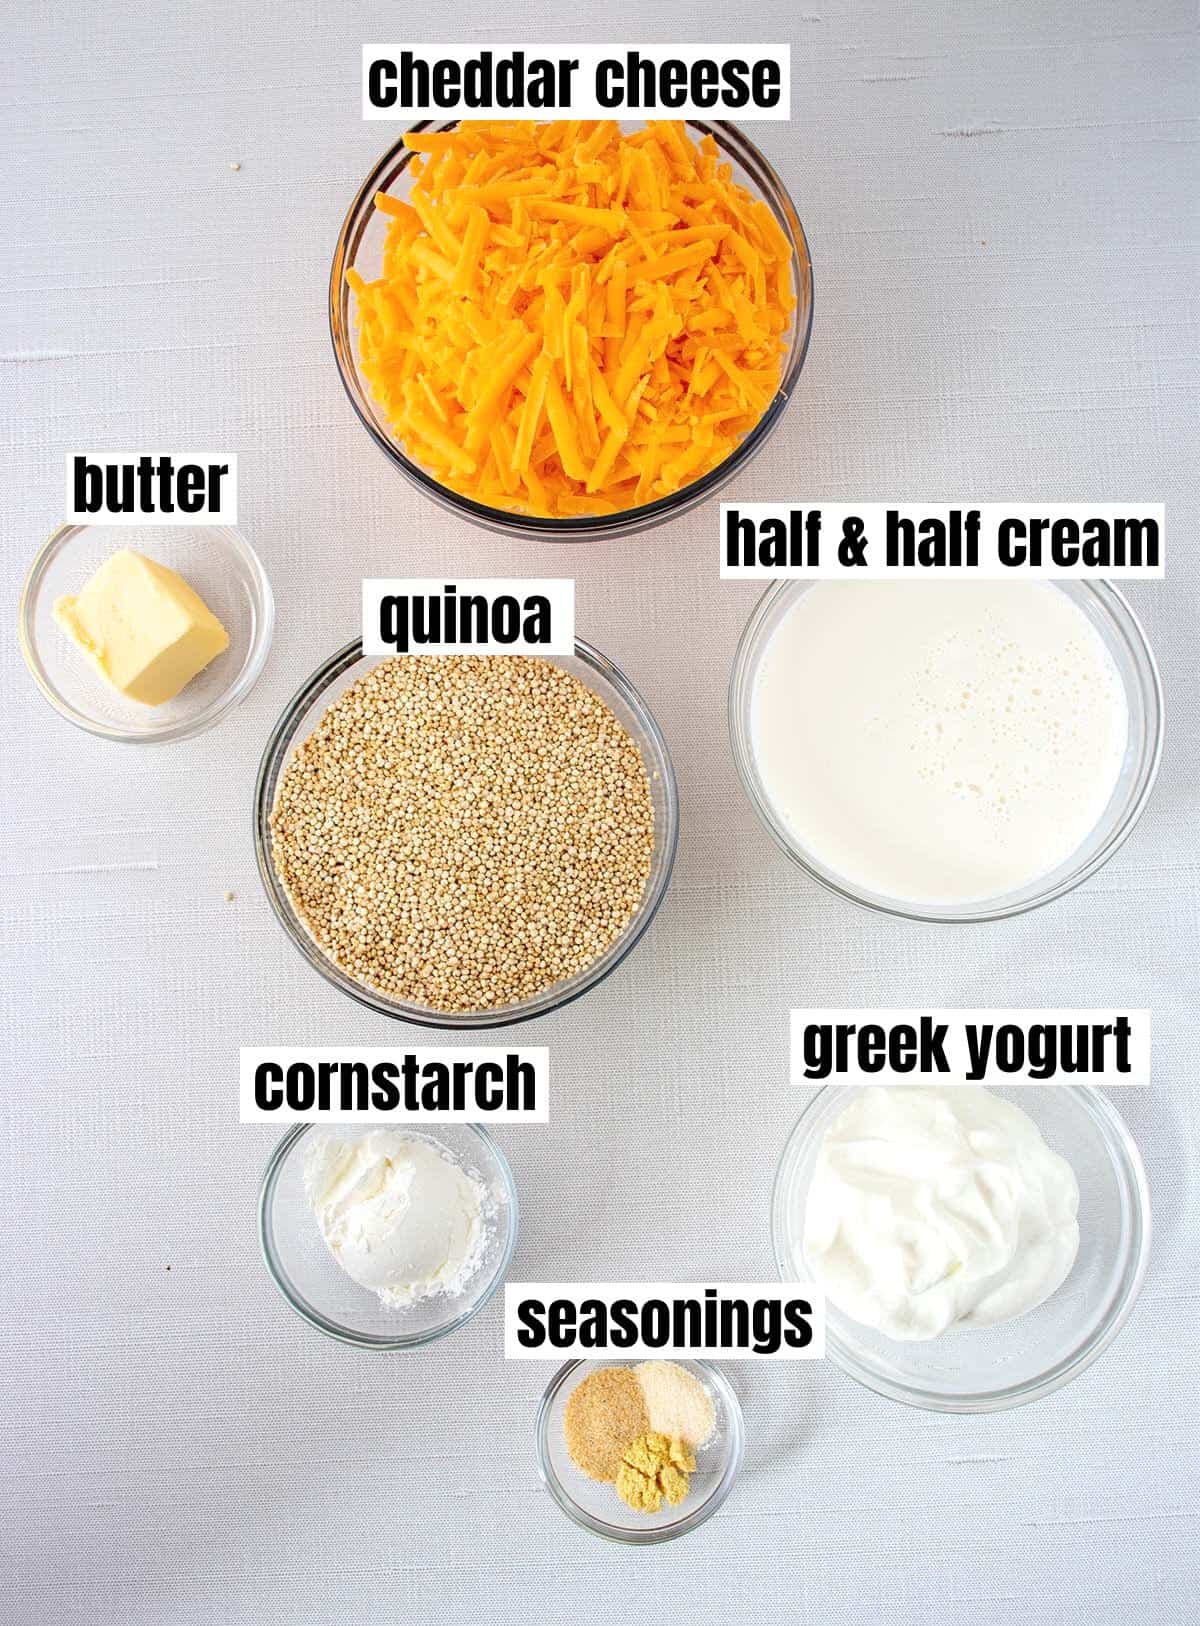 ingredients for cheesy quinoa which include cheddar cheese, butter, quinoa, half & half cream, cornstarch, greek yogurt, & seasonings.